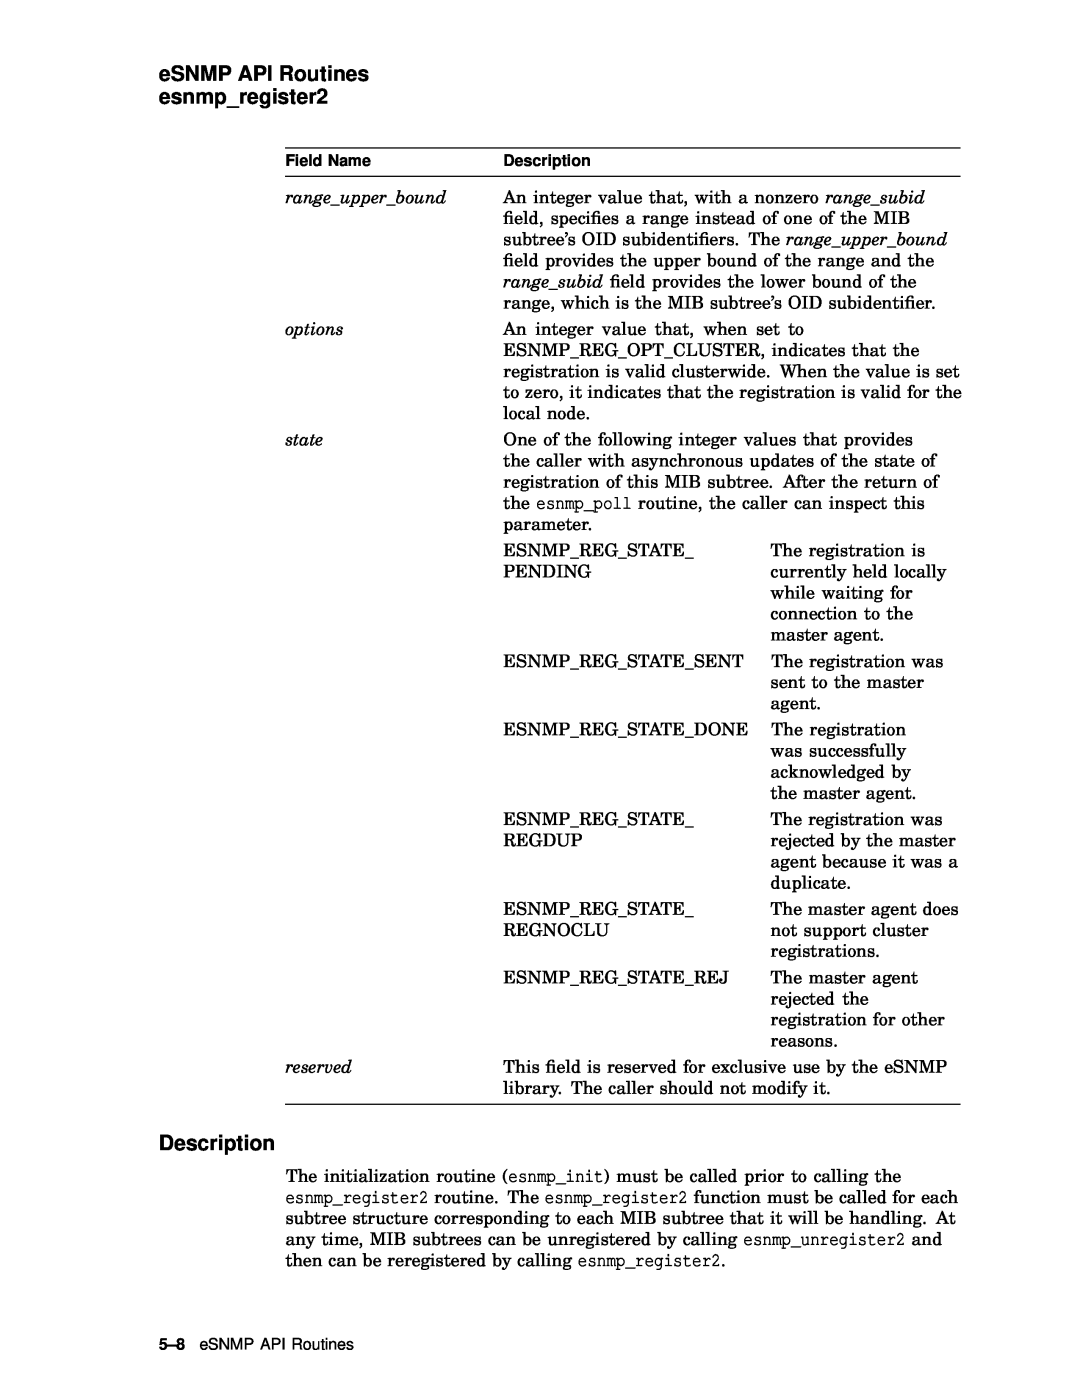 Compaq AAR04BCTE manual eSNMP API Routines esnmpregister2, Description 